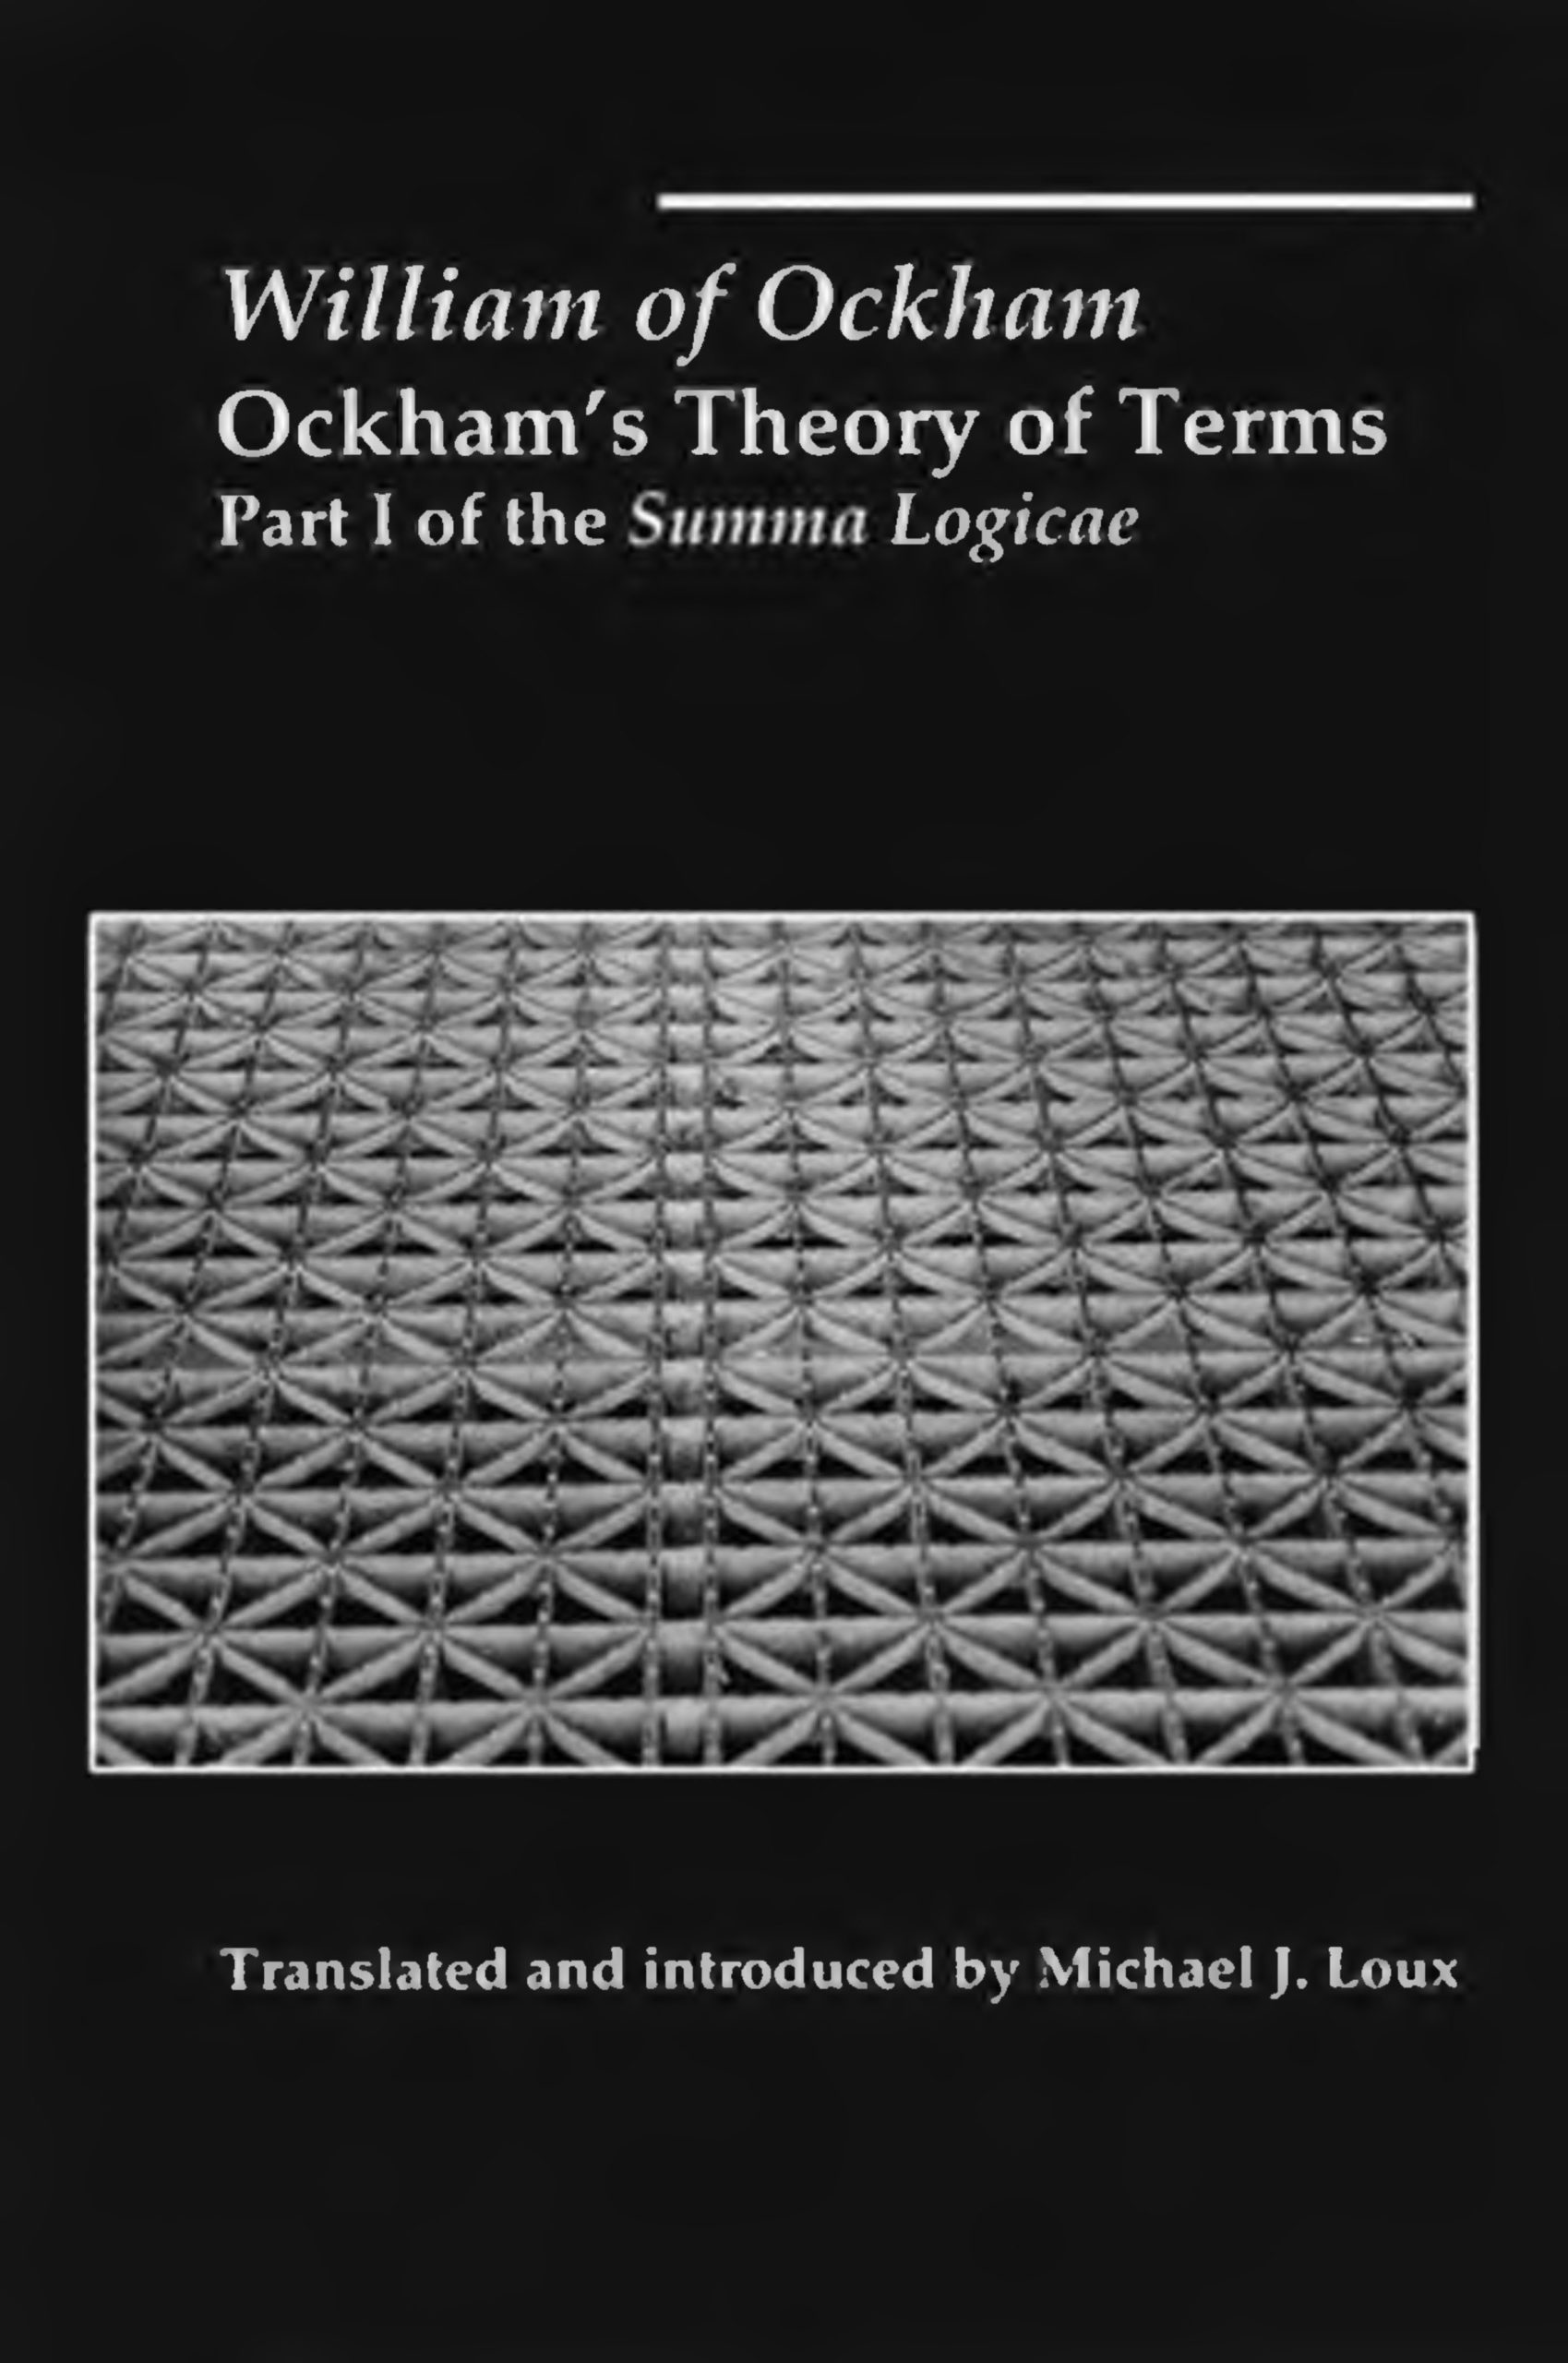 ockham summa logicae analysis